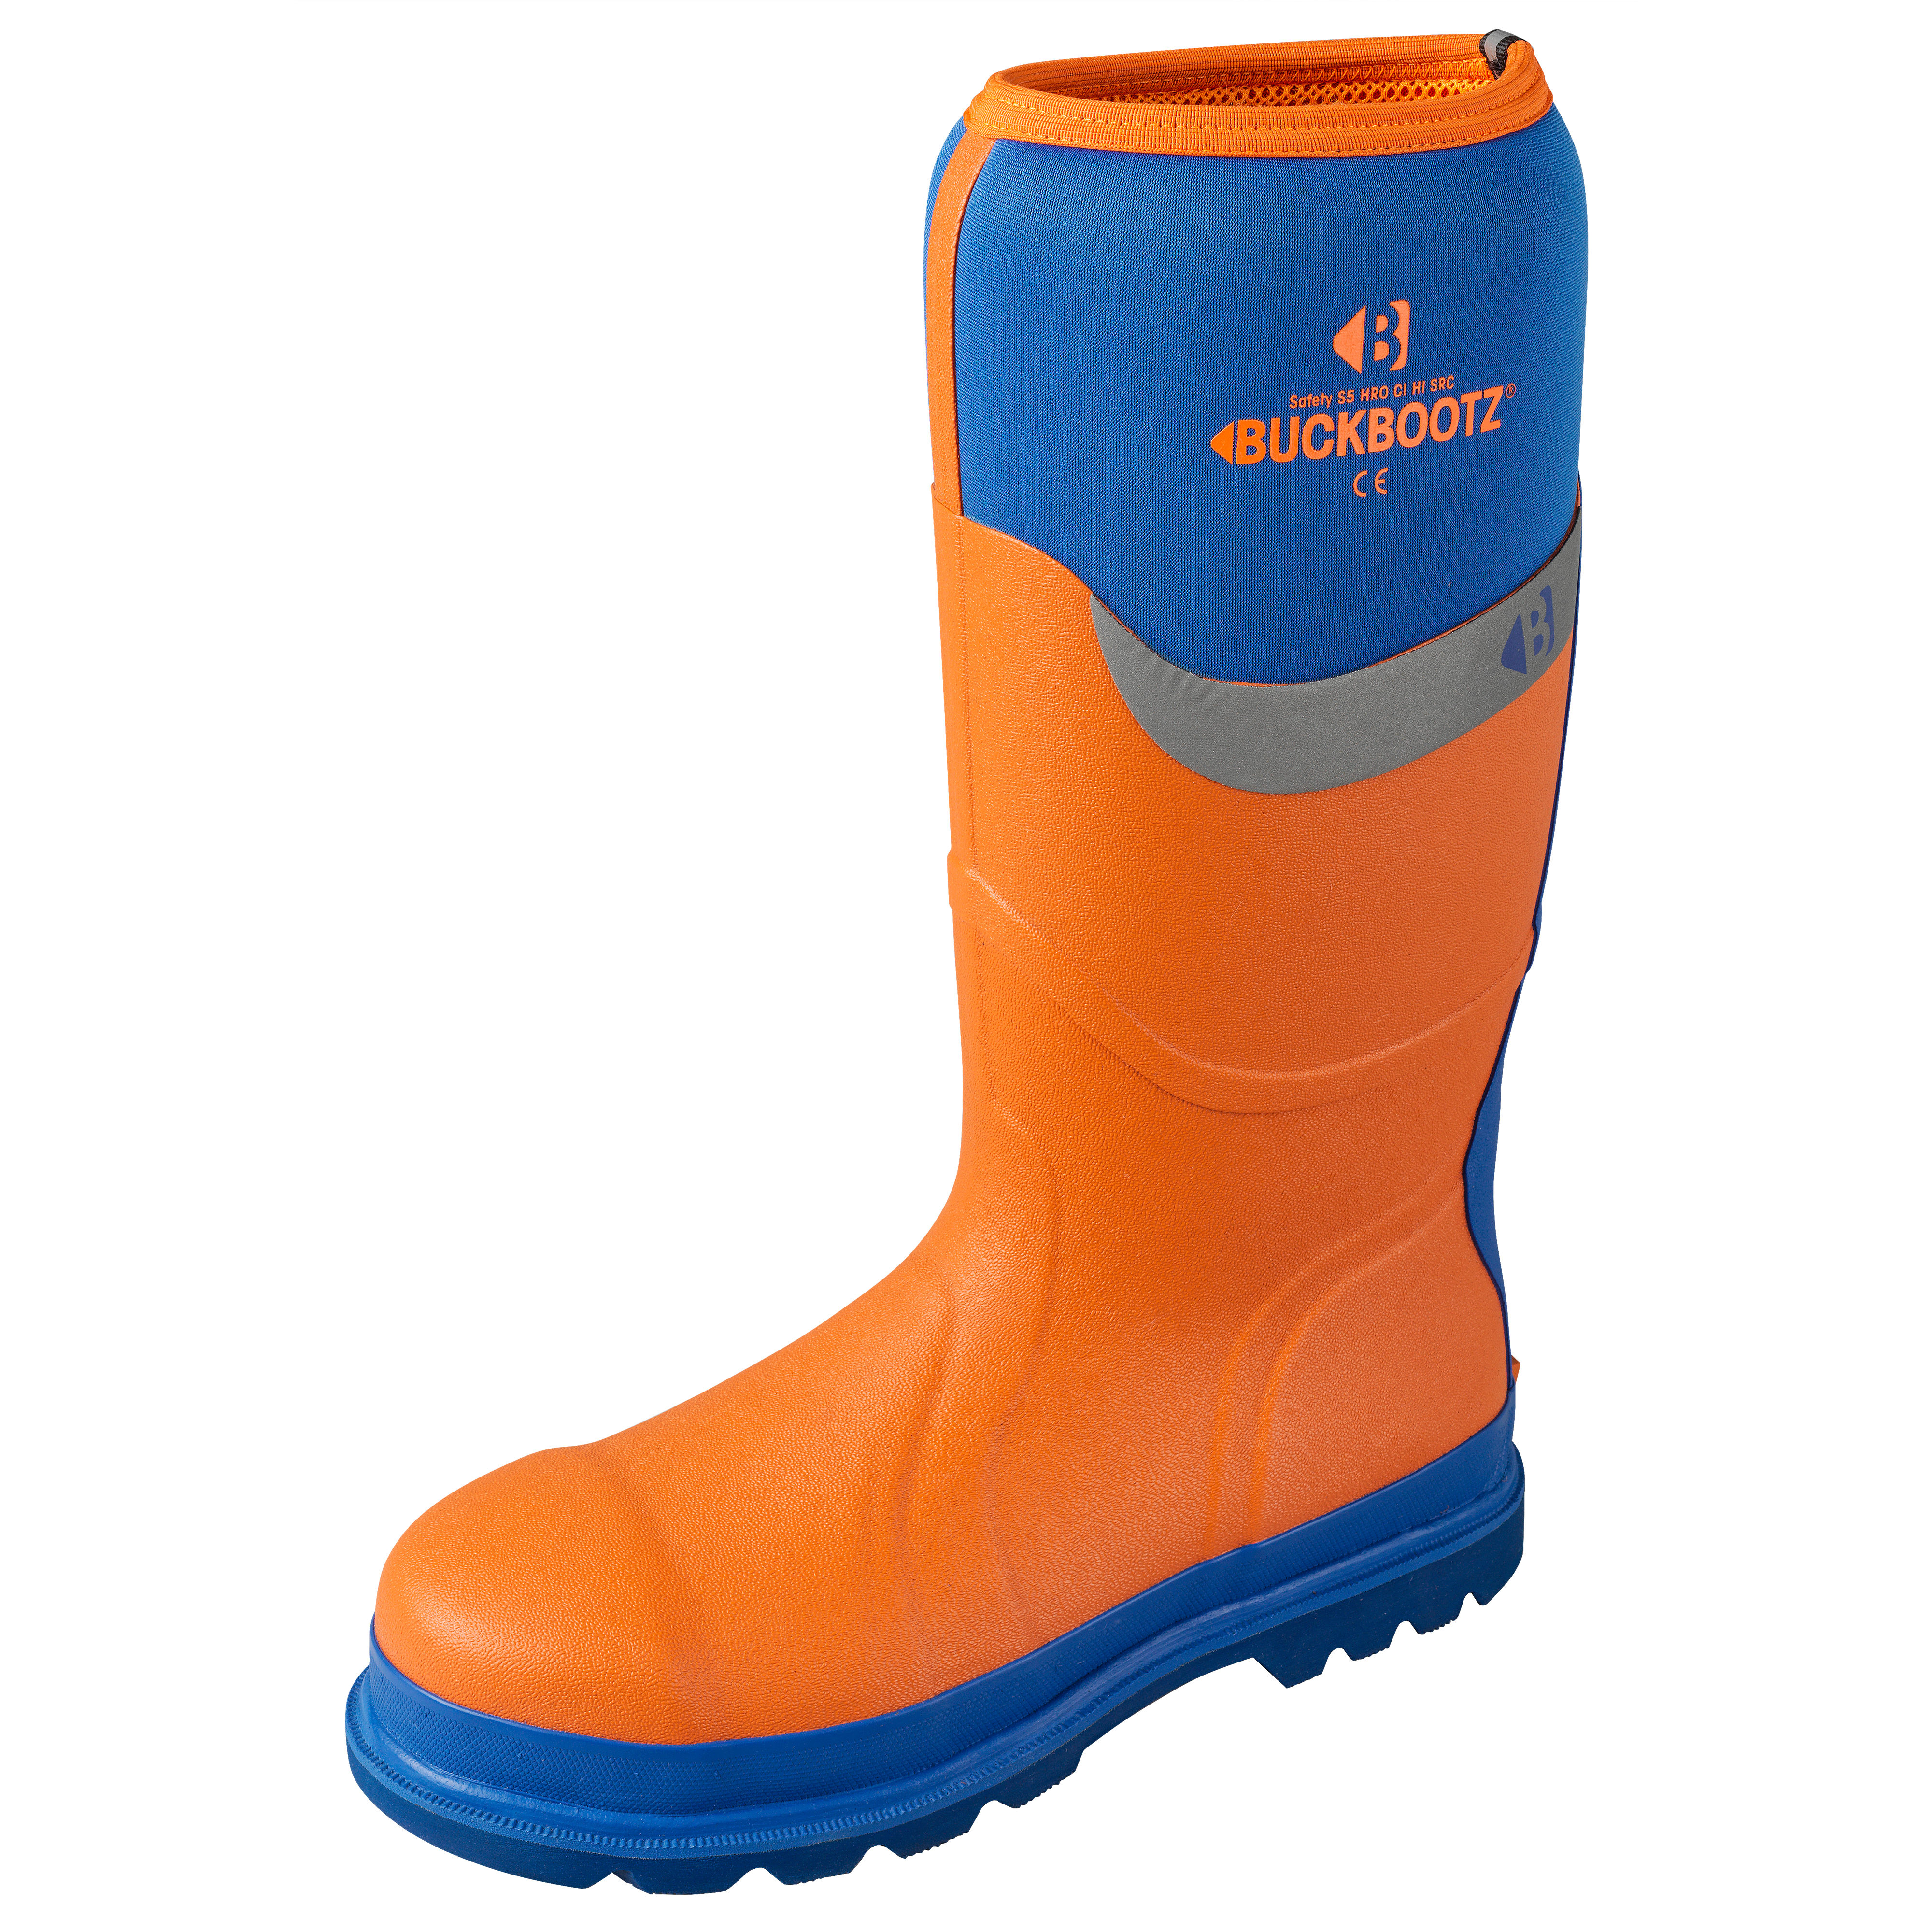 Buckler Buckbootz Insulated Wellington Safety Boots Orange/Blue - BBZ6000OR